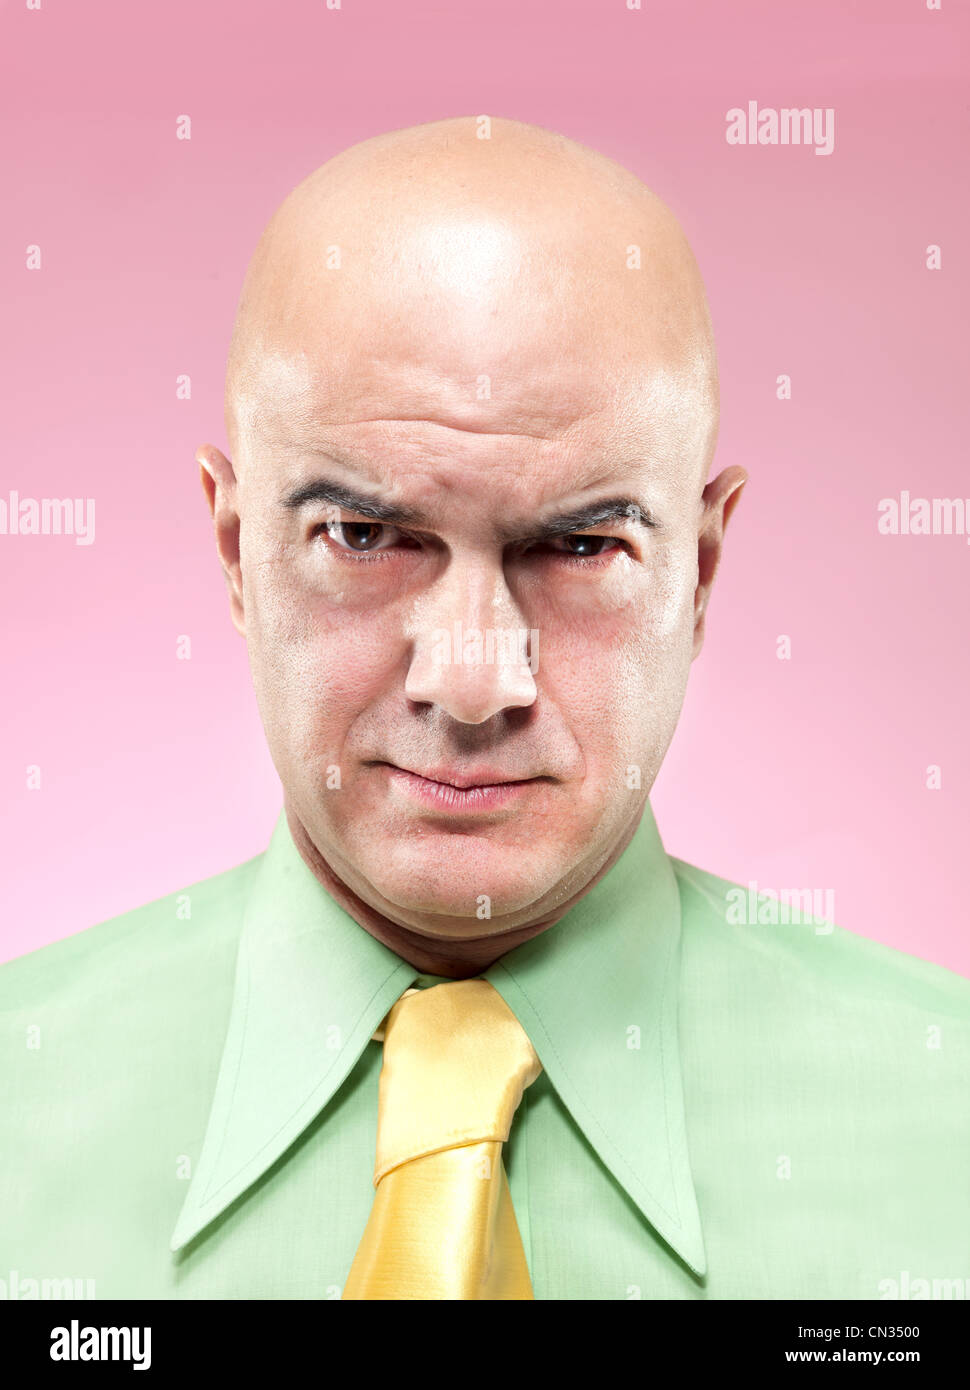 Bald man frowning Stock Photo